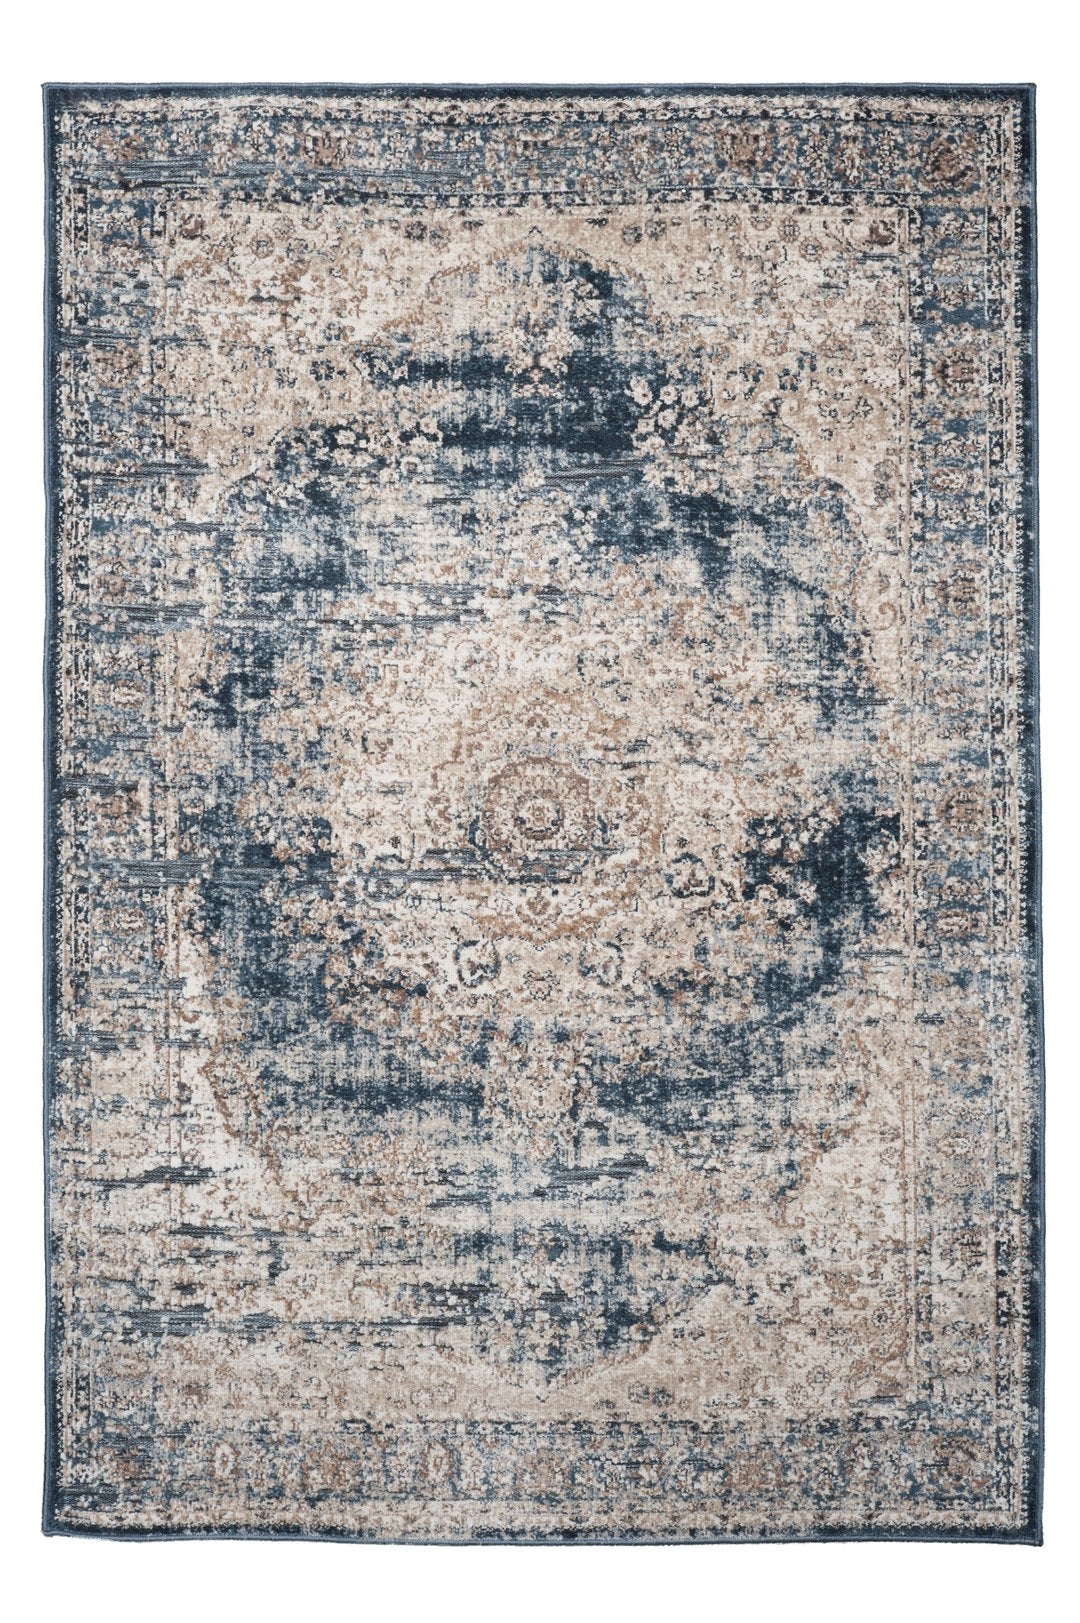 Provence blue rug